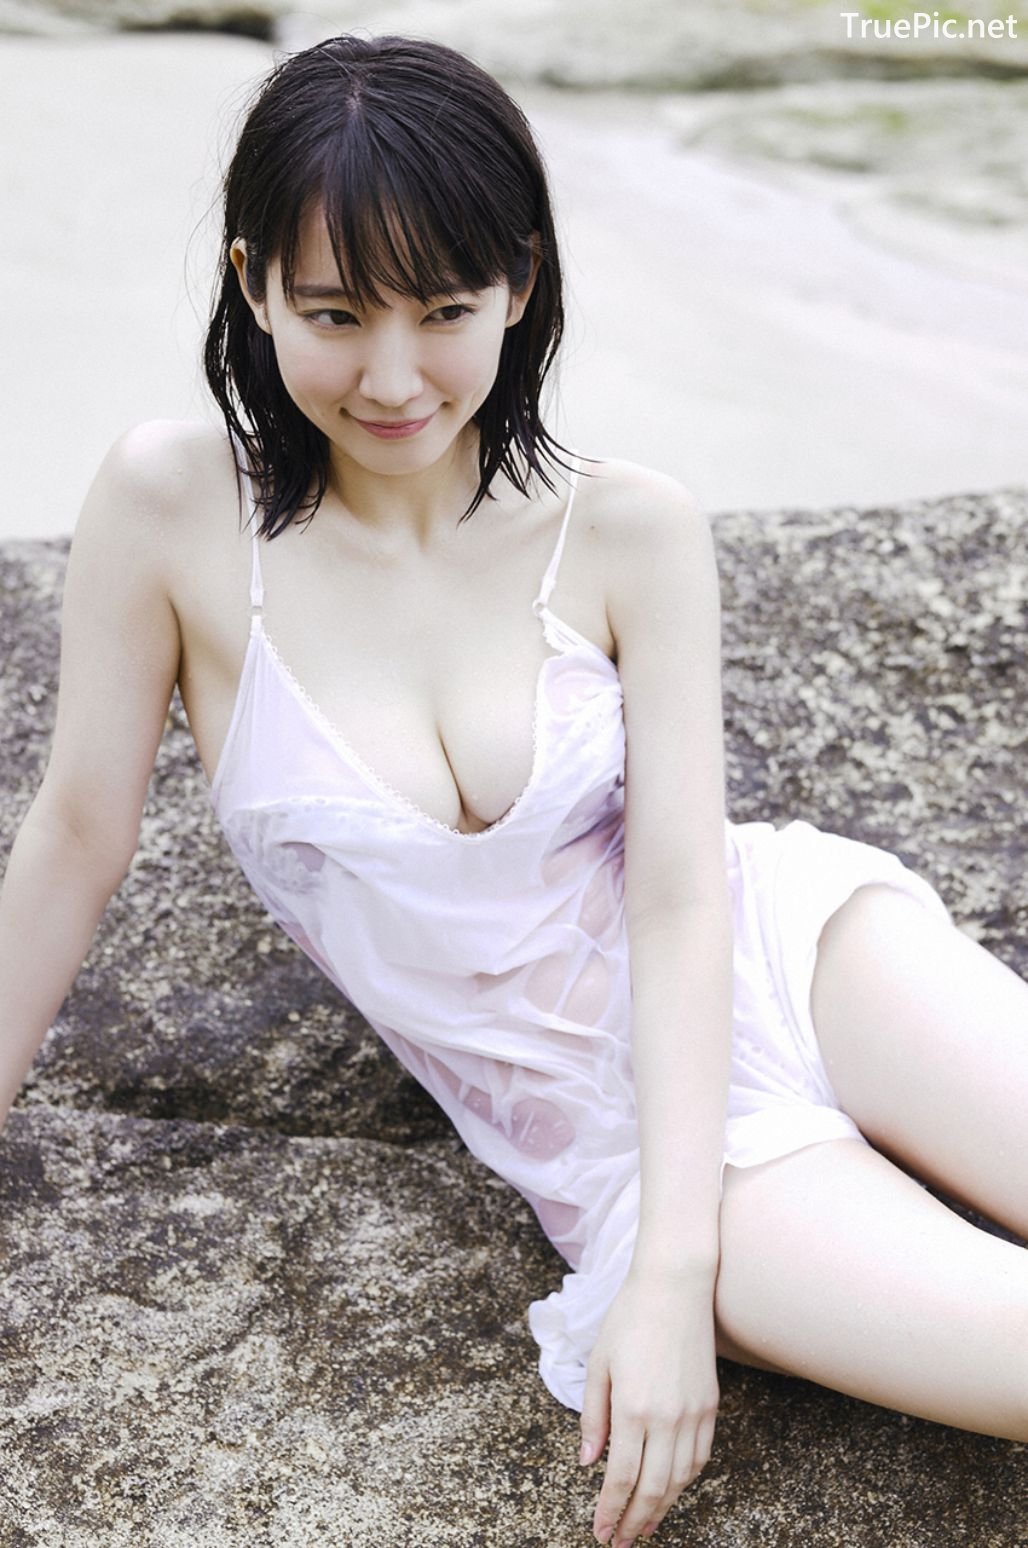 Image-Japanese-Actress-And-Model-Riho-Yoshioka-Pure-Beauty-Of-Sea-Goddess-TruePic.net- Picture-52